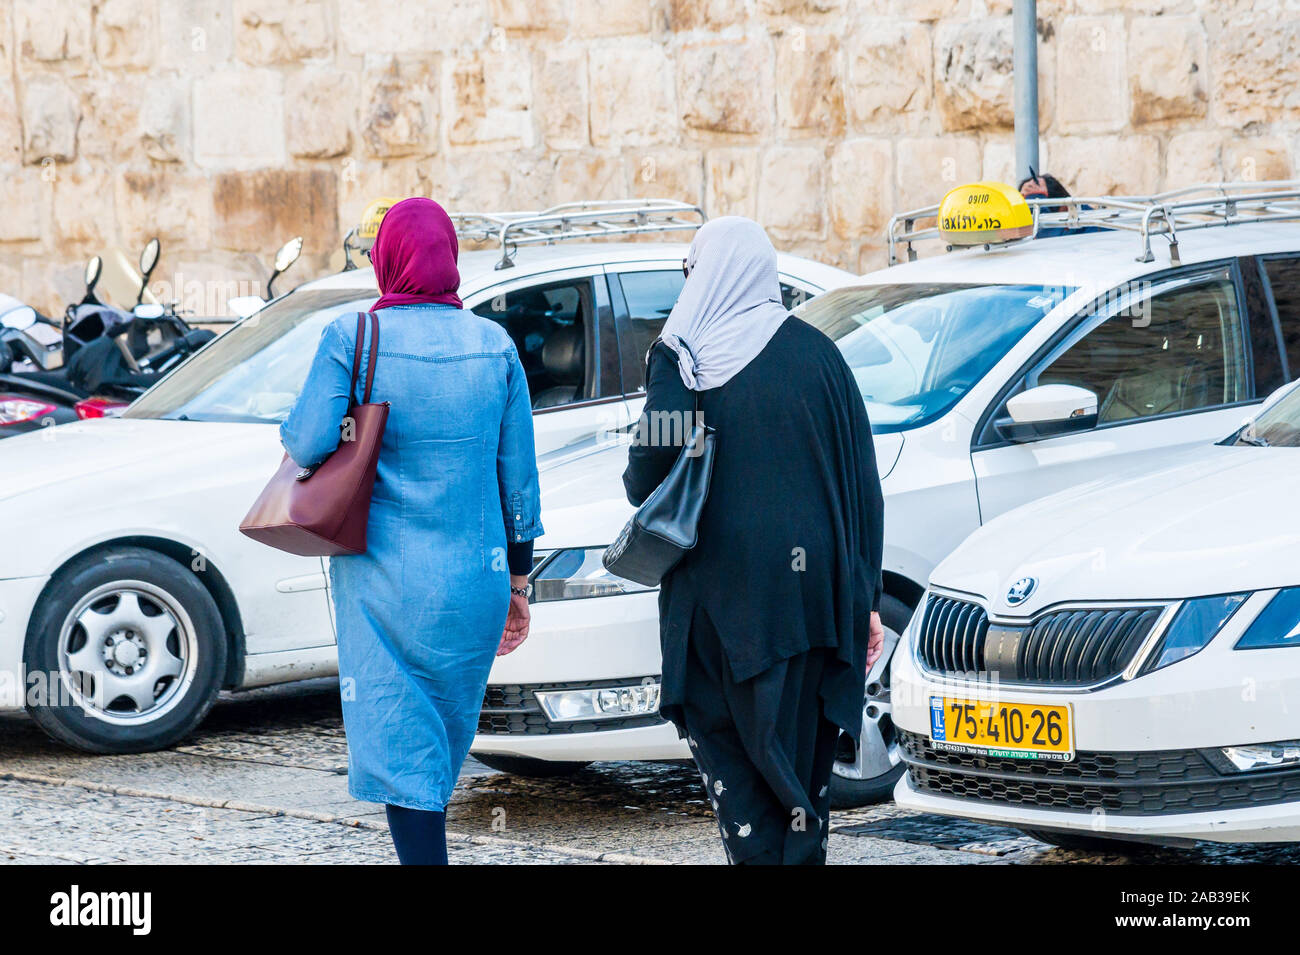 JERUSALEM, ISRAEL / 25 NOV 2019: Two Muslim women wearing hijbas (head coverings mandated by Islamic law), Jerusalem’s Old City Stock Photo